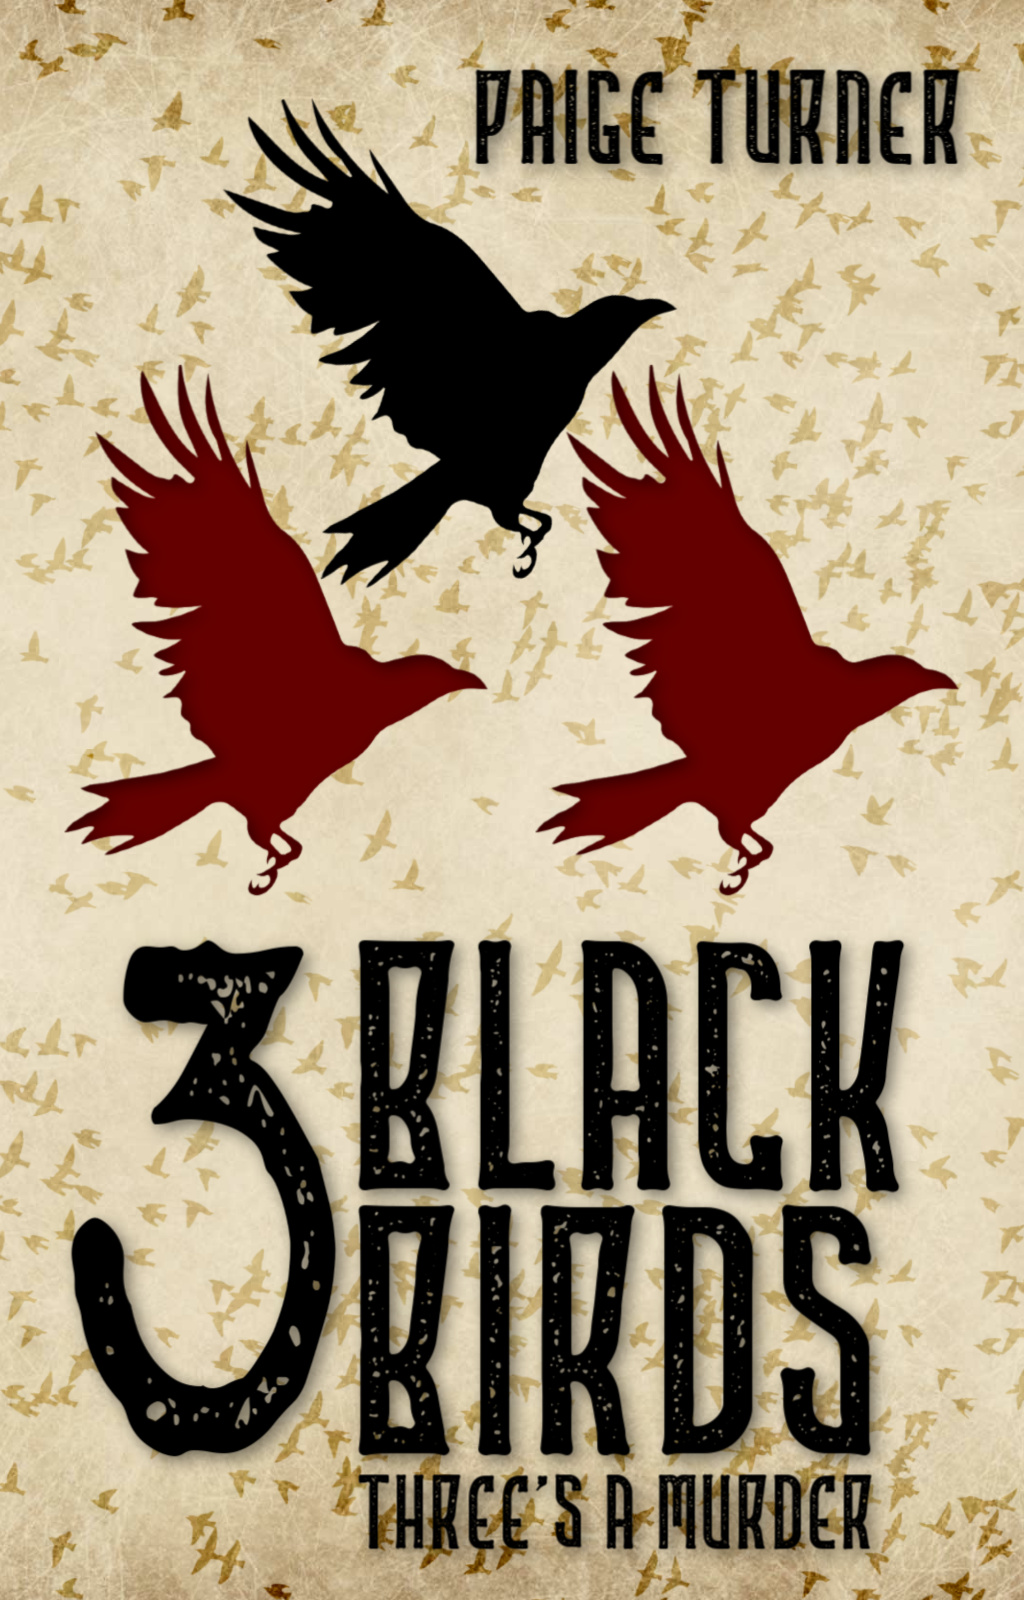 197-617-three-black-birds-cover-3.jpg